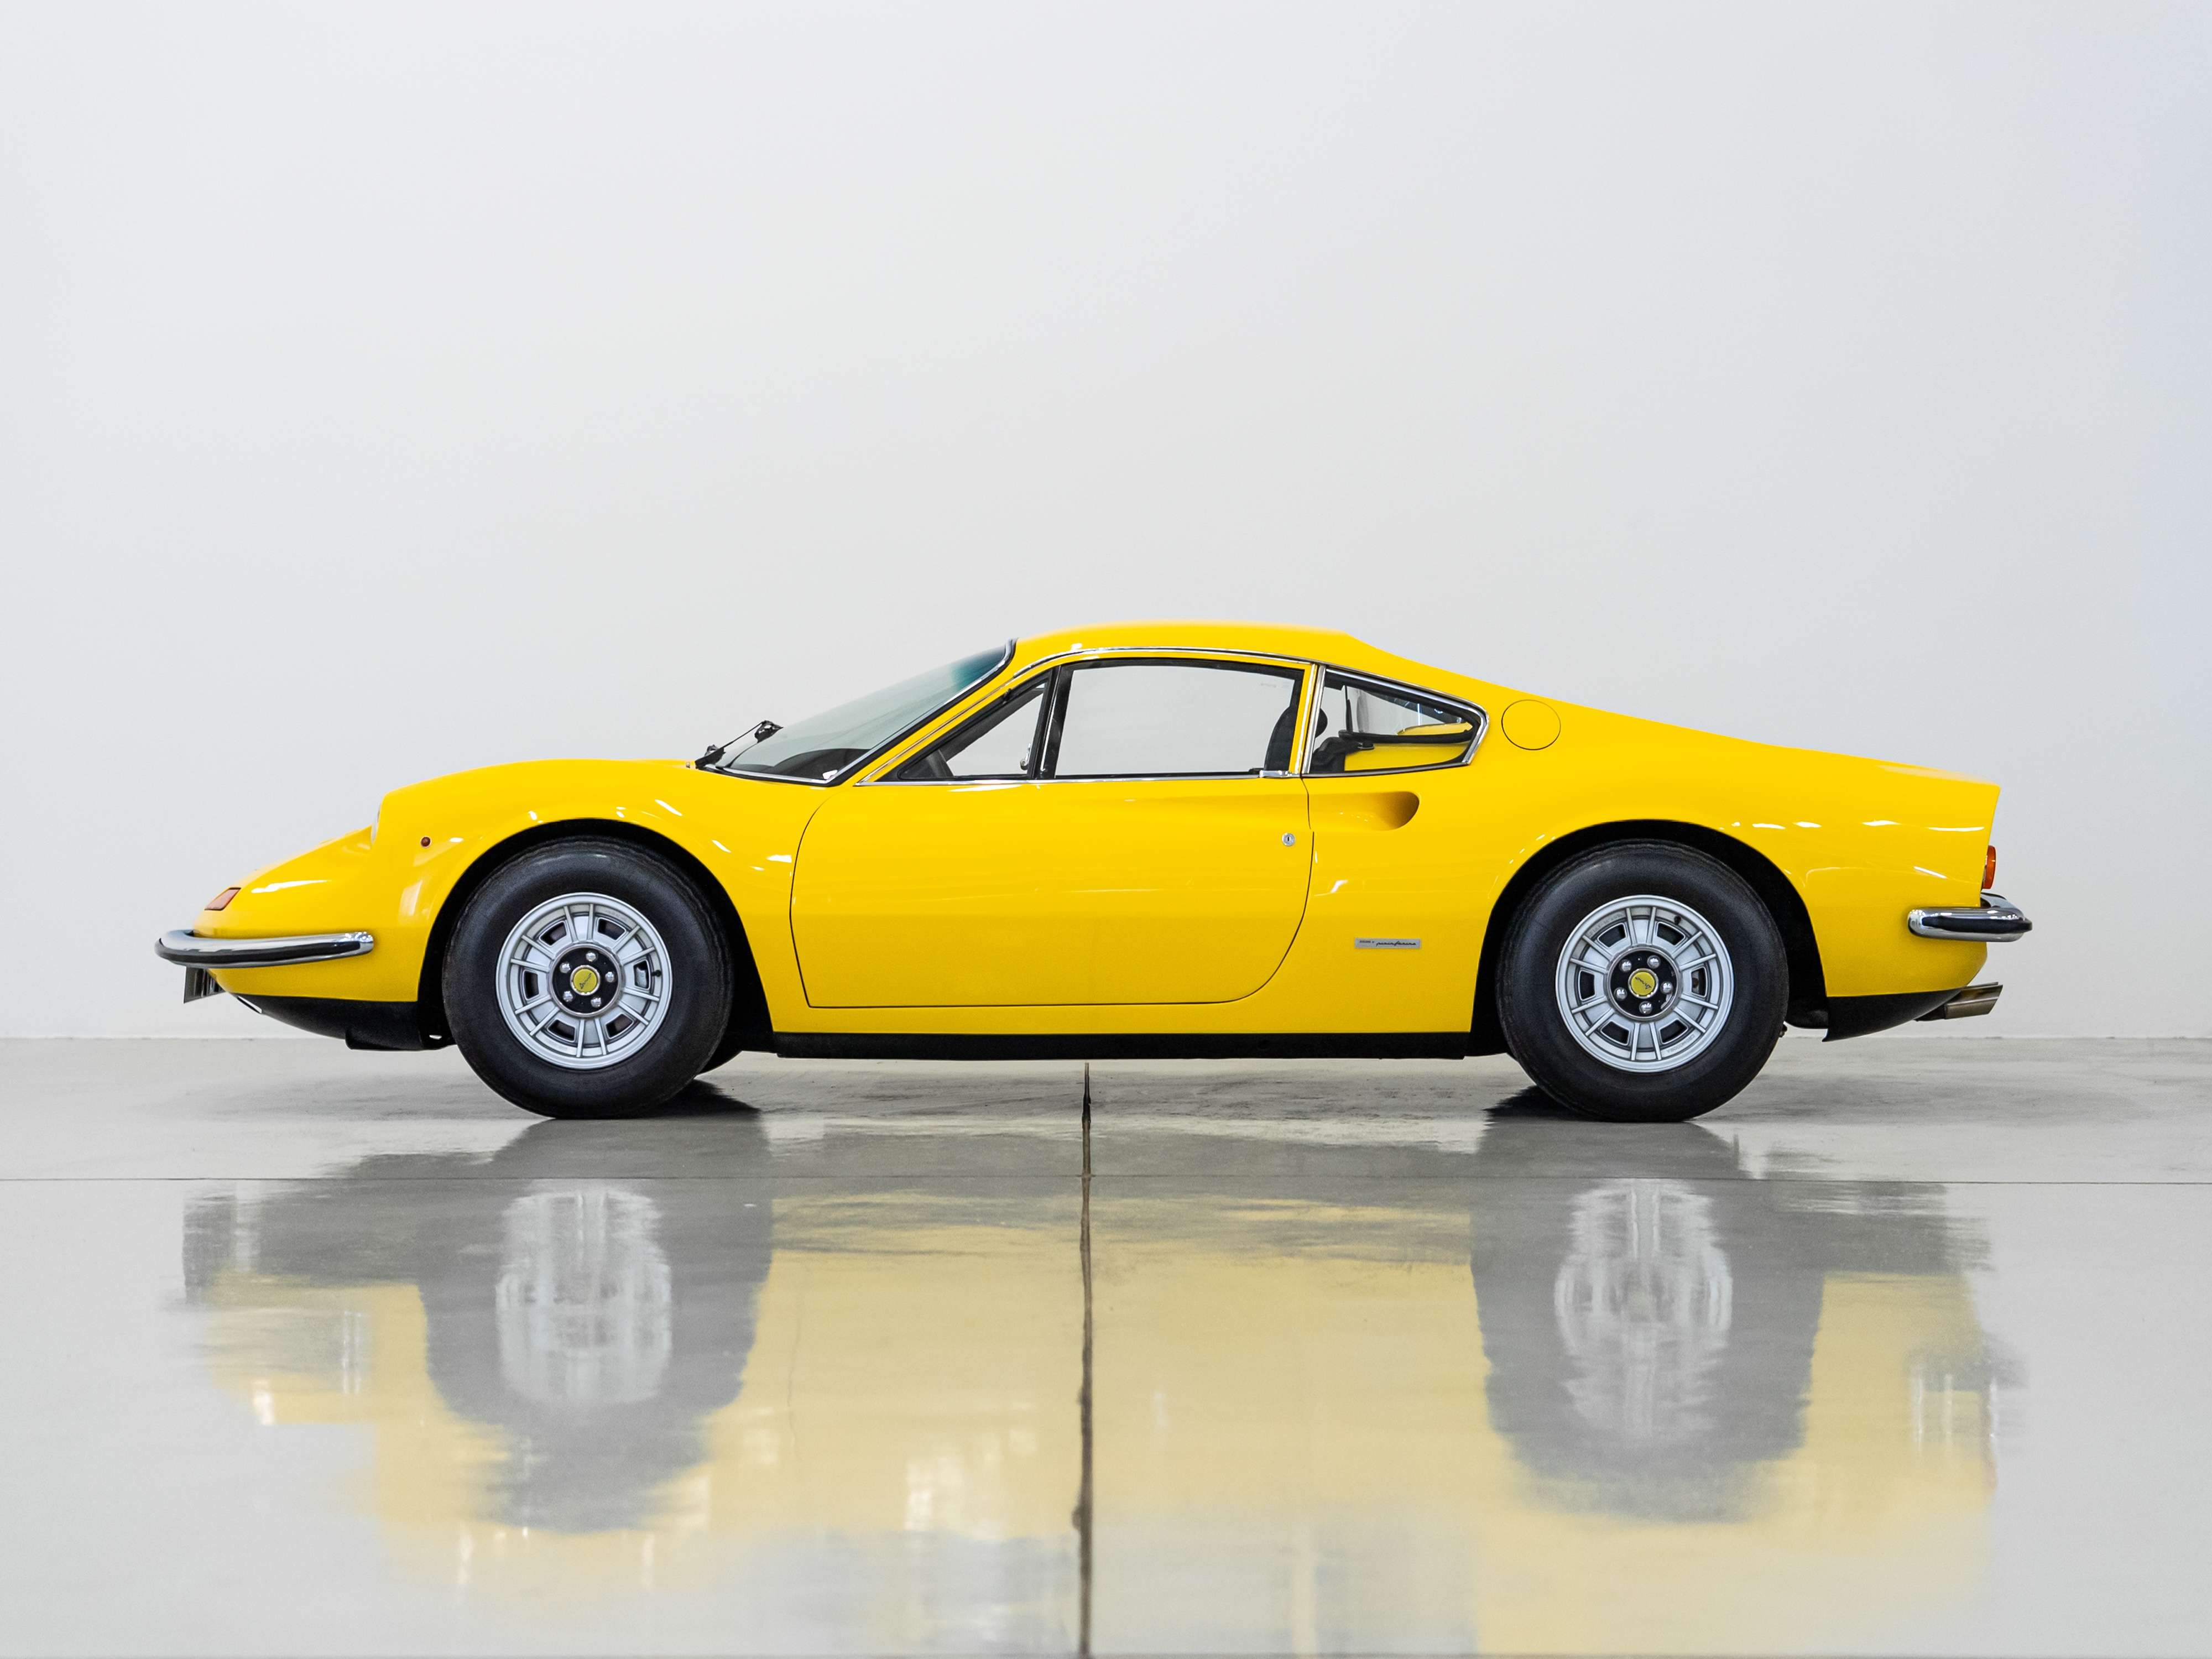 Ferrari 246 Coupe in Yellow used in Veggiano - Padova - PD for € 650,000.-